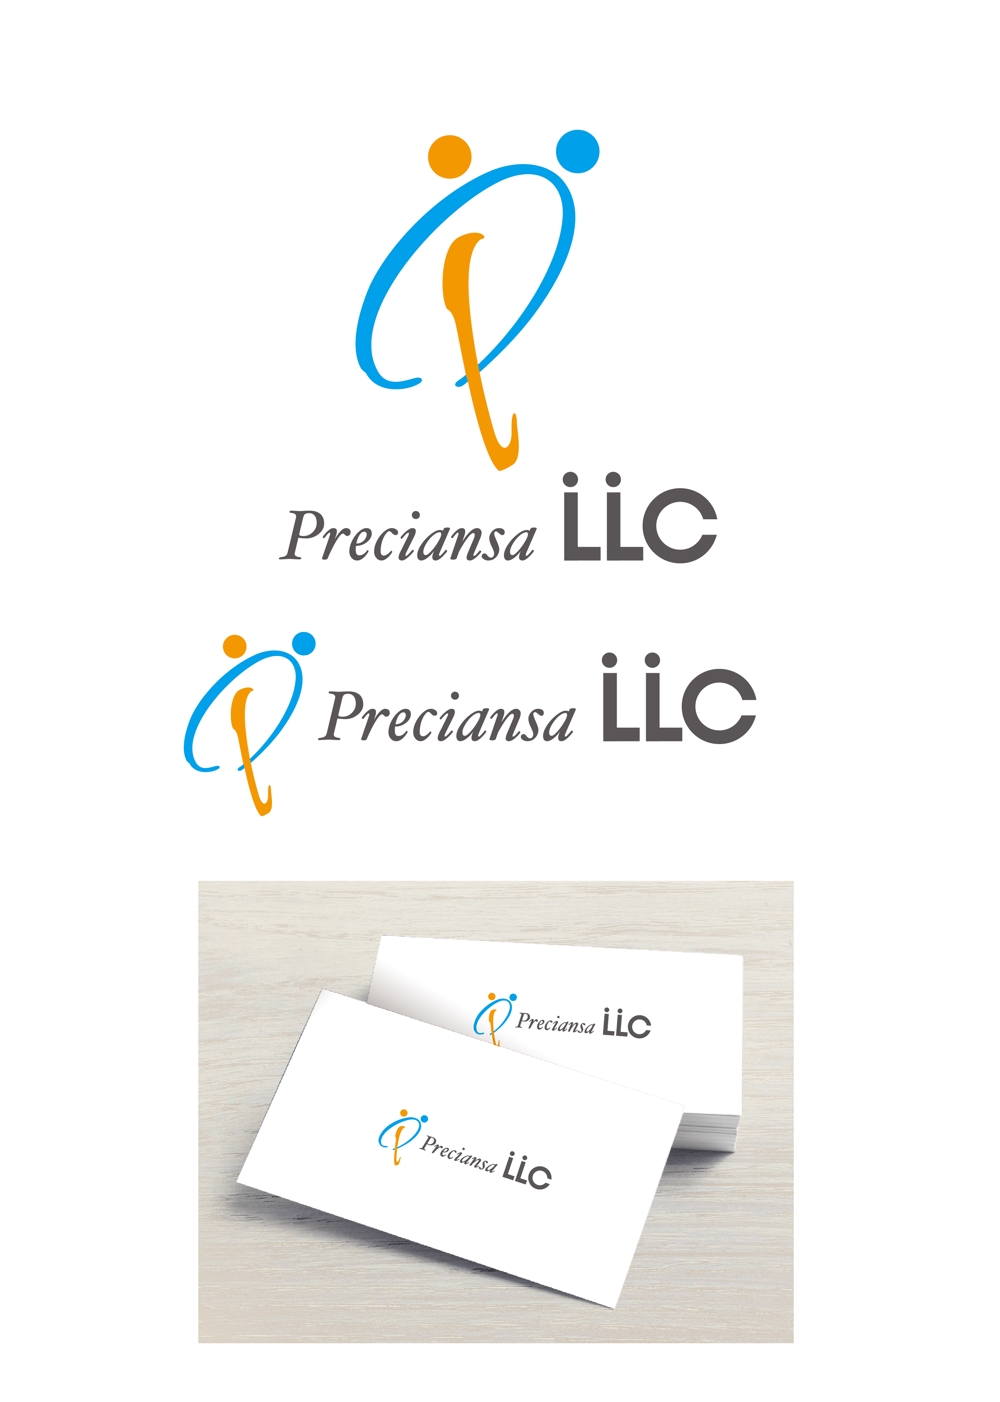 Preciansa LLC_アートボード 1.jpg